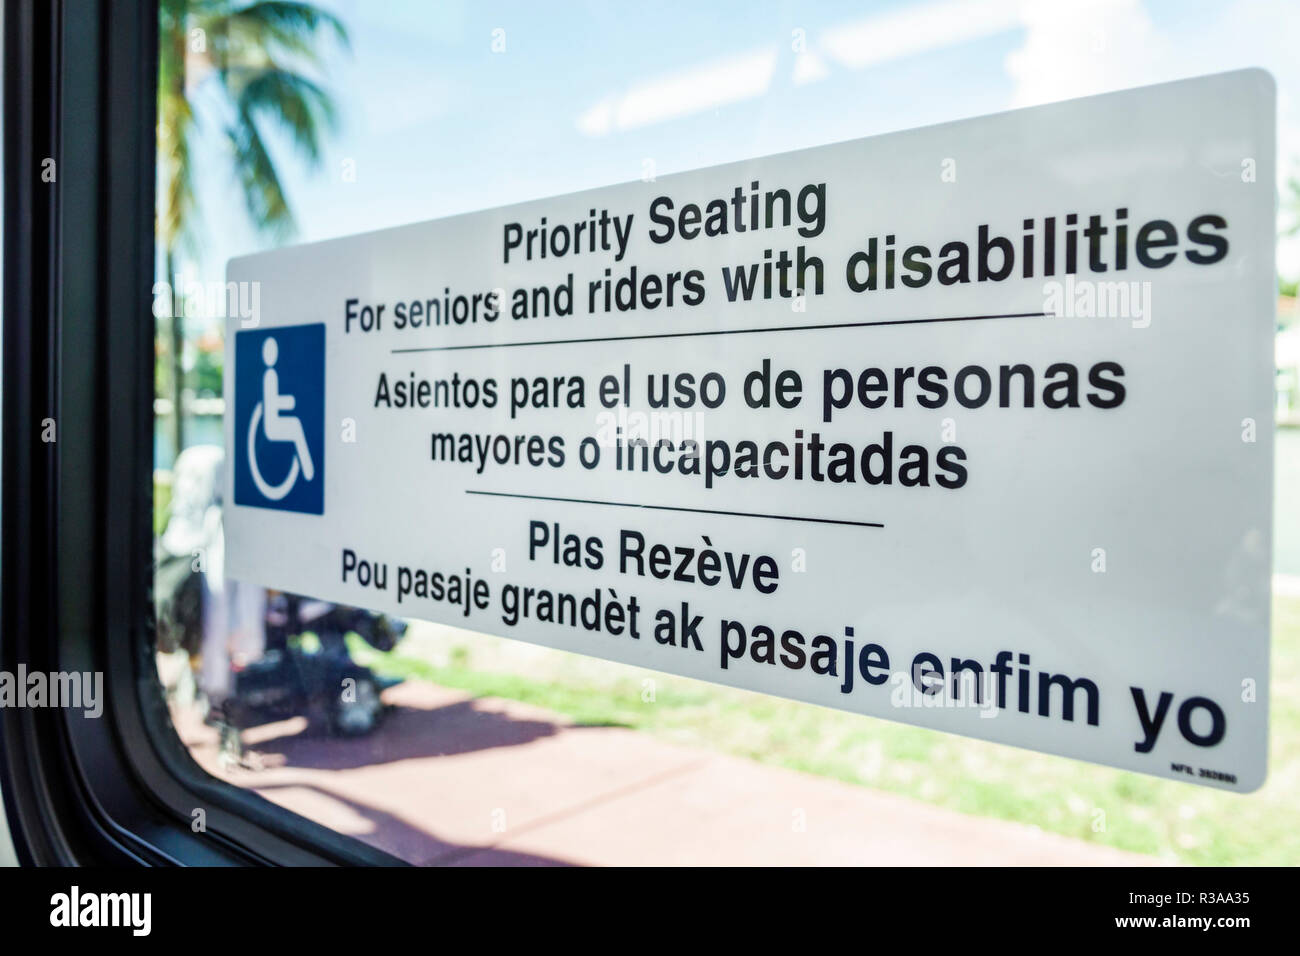 Miami Beach Florida,Miami-Dade Metrobus sign bilingual Spanish English Creole languages,priority seating seniors disabilities,FL181115023 Stock Photo